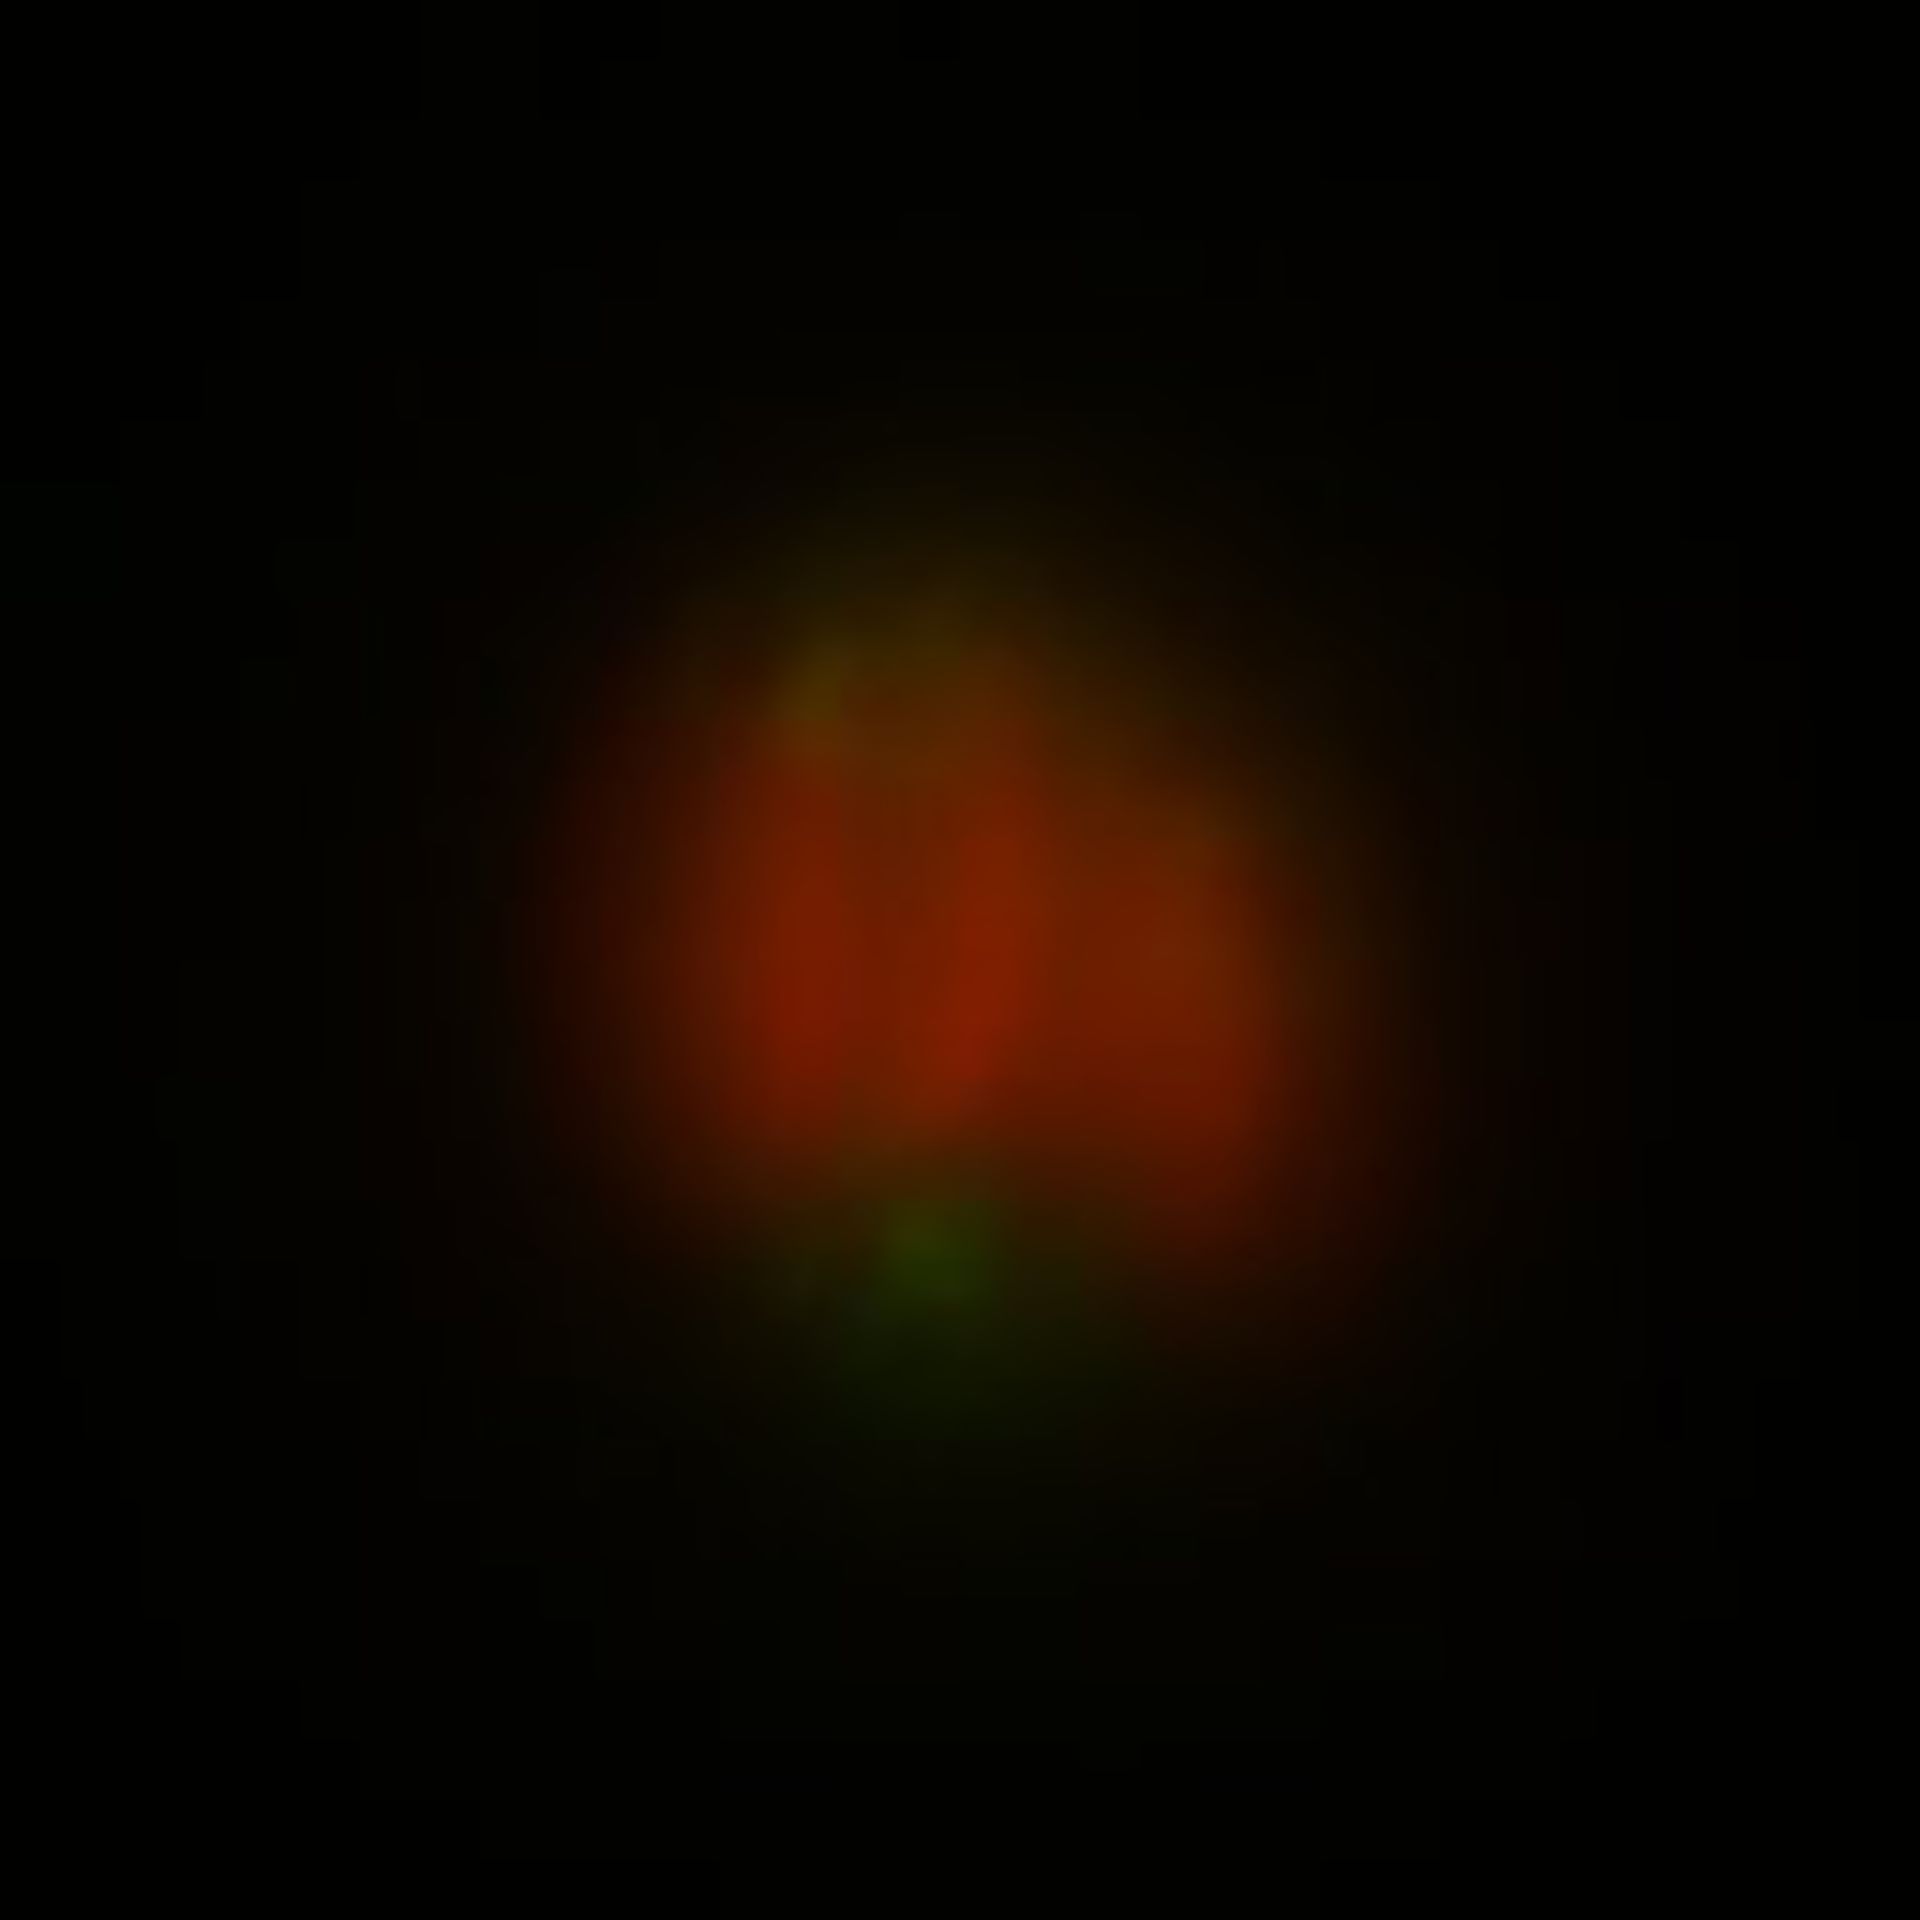 Toxoplasma gondii RH (Polar ring of apical complex) - CIL:10516